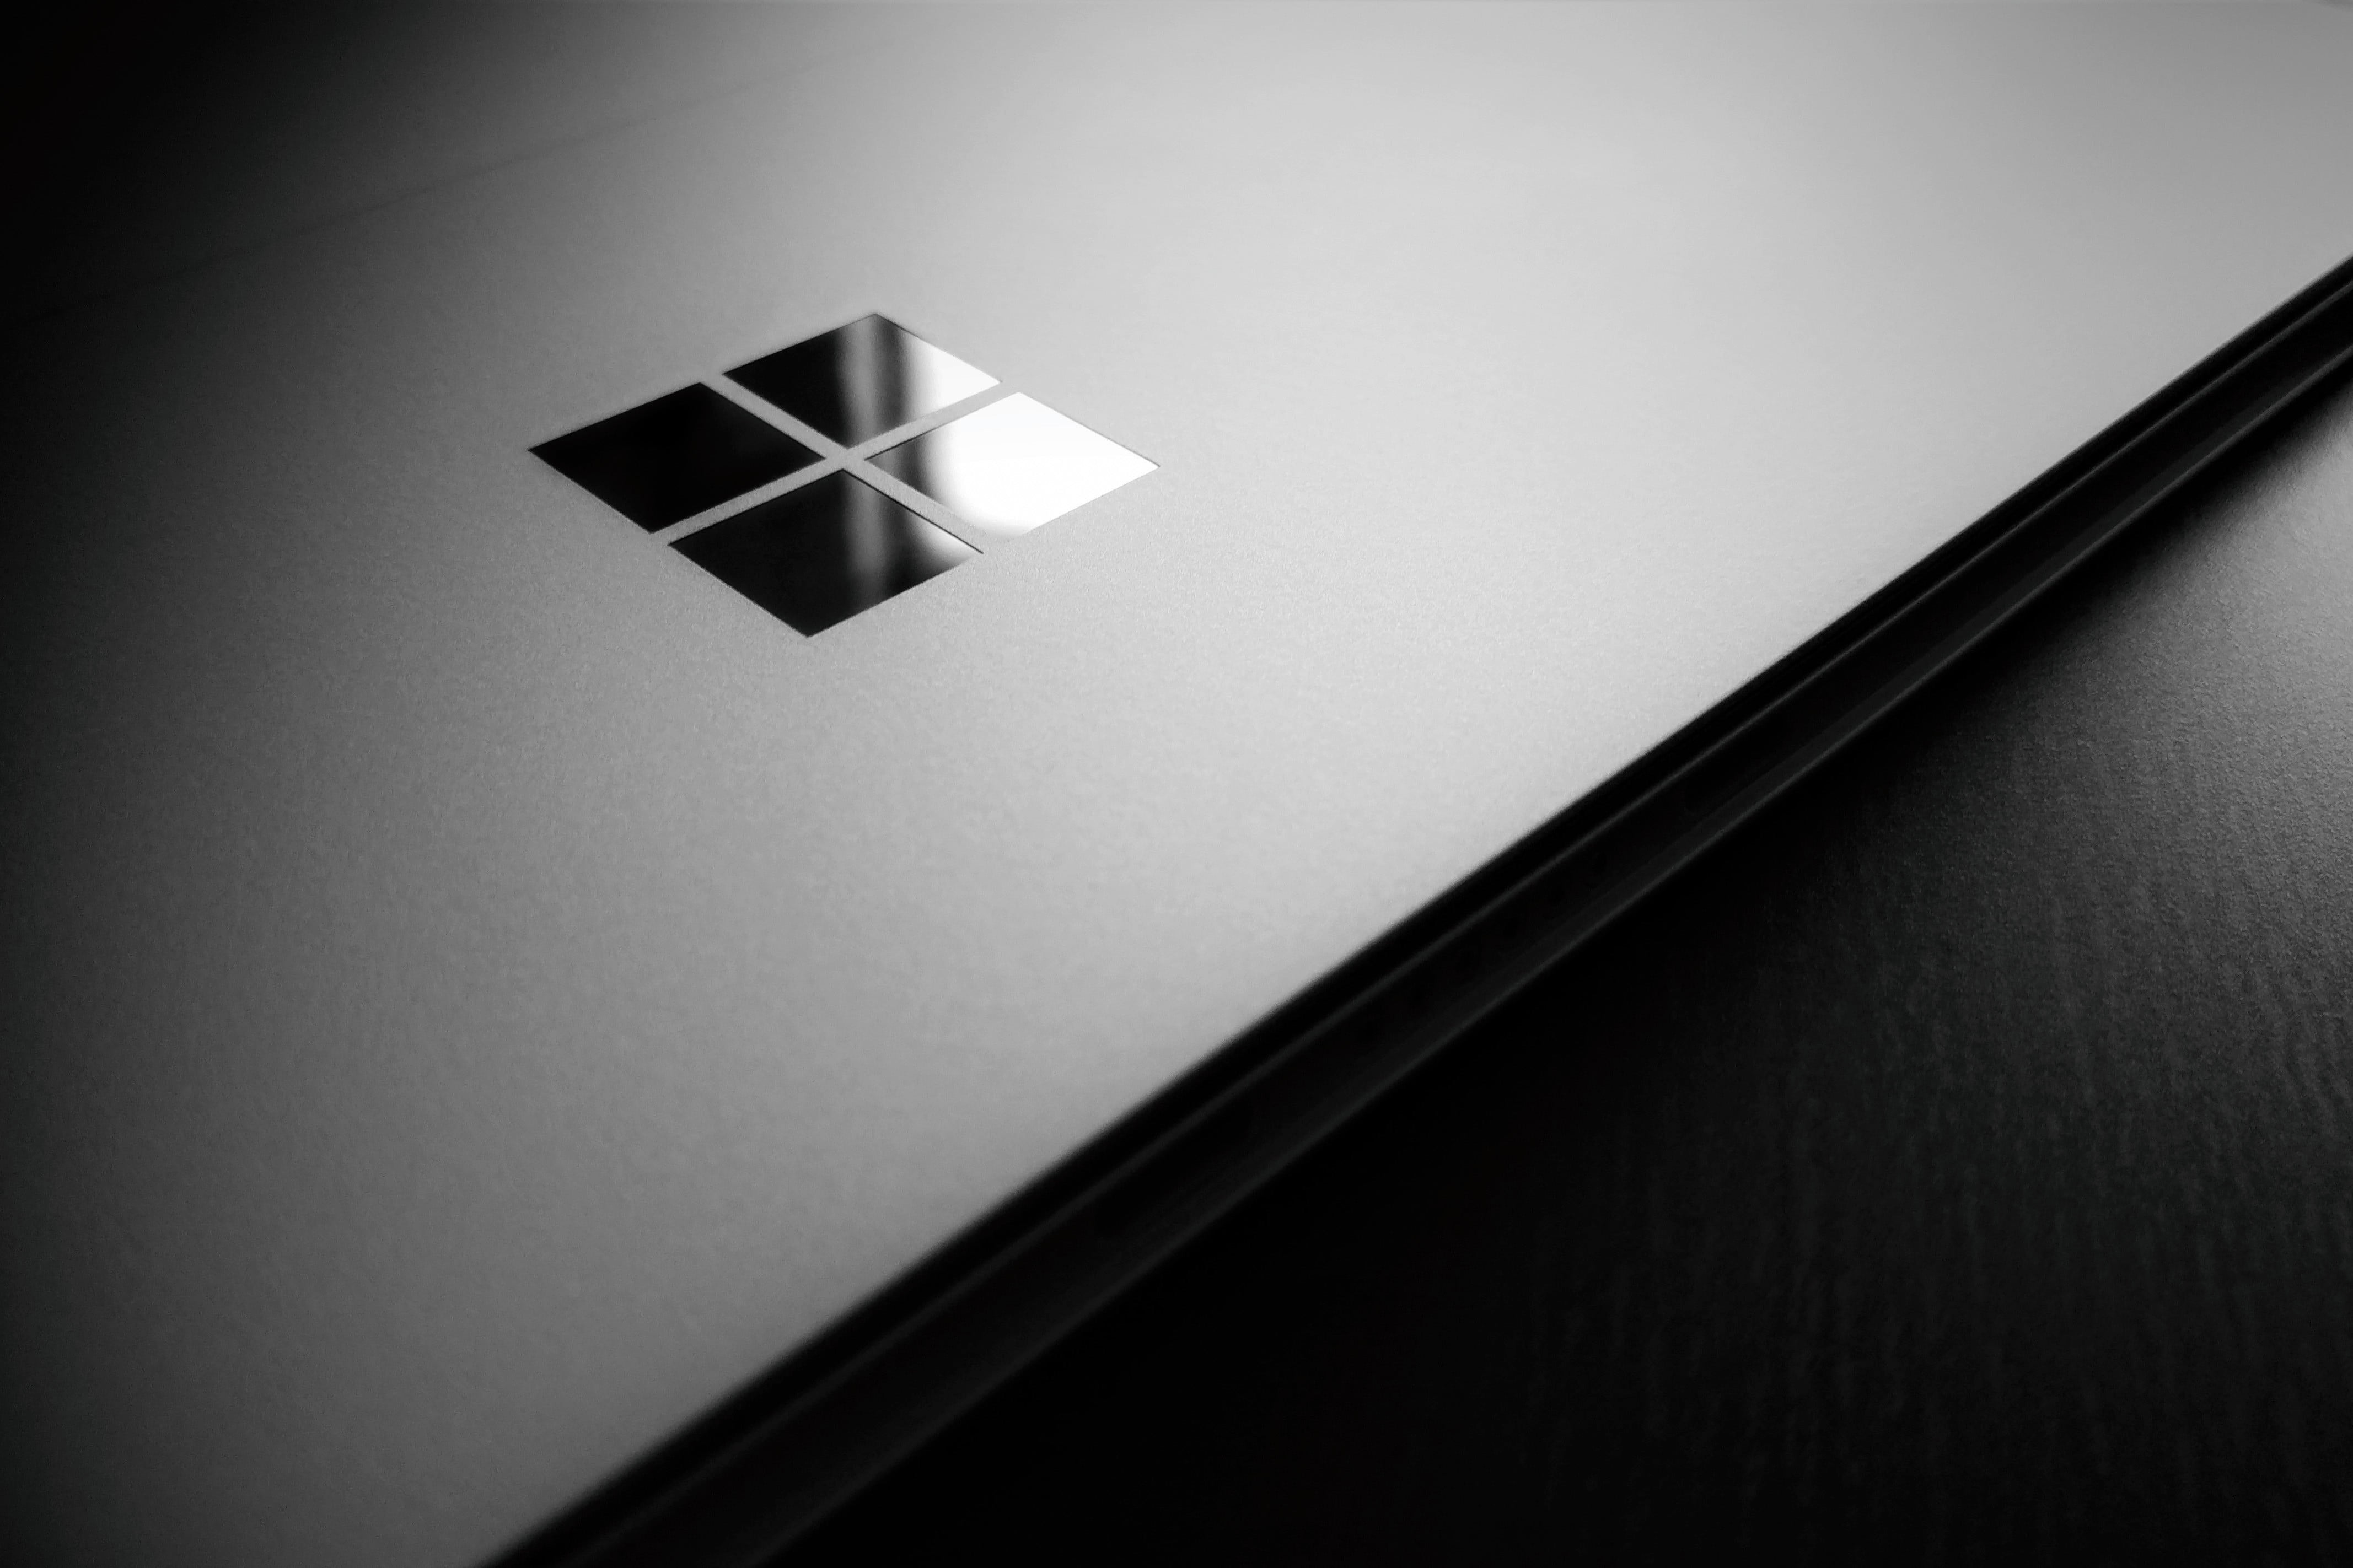 Microsoft Windows logo, Windows 10, wooden surface, laptop, lighting equipment